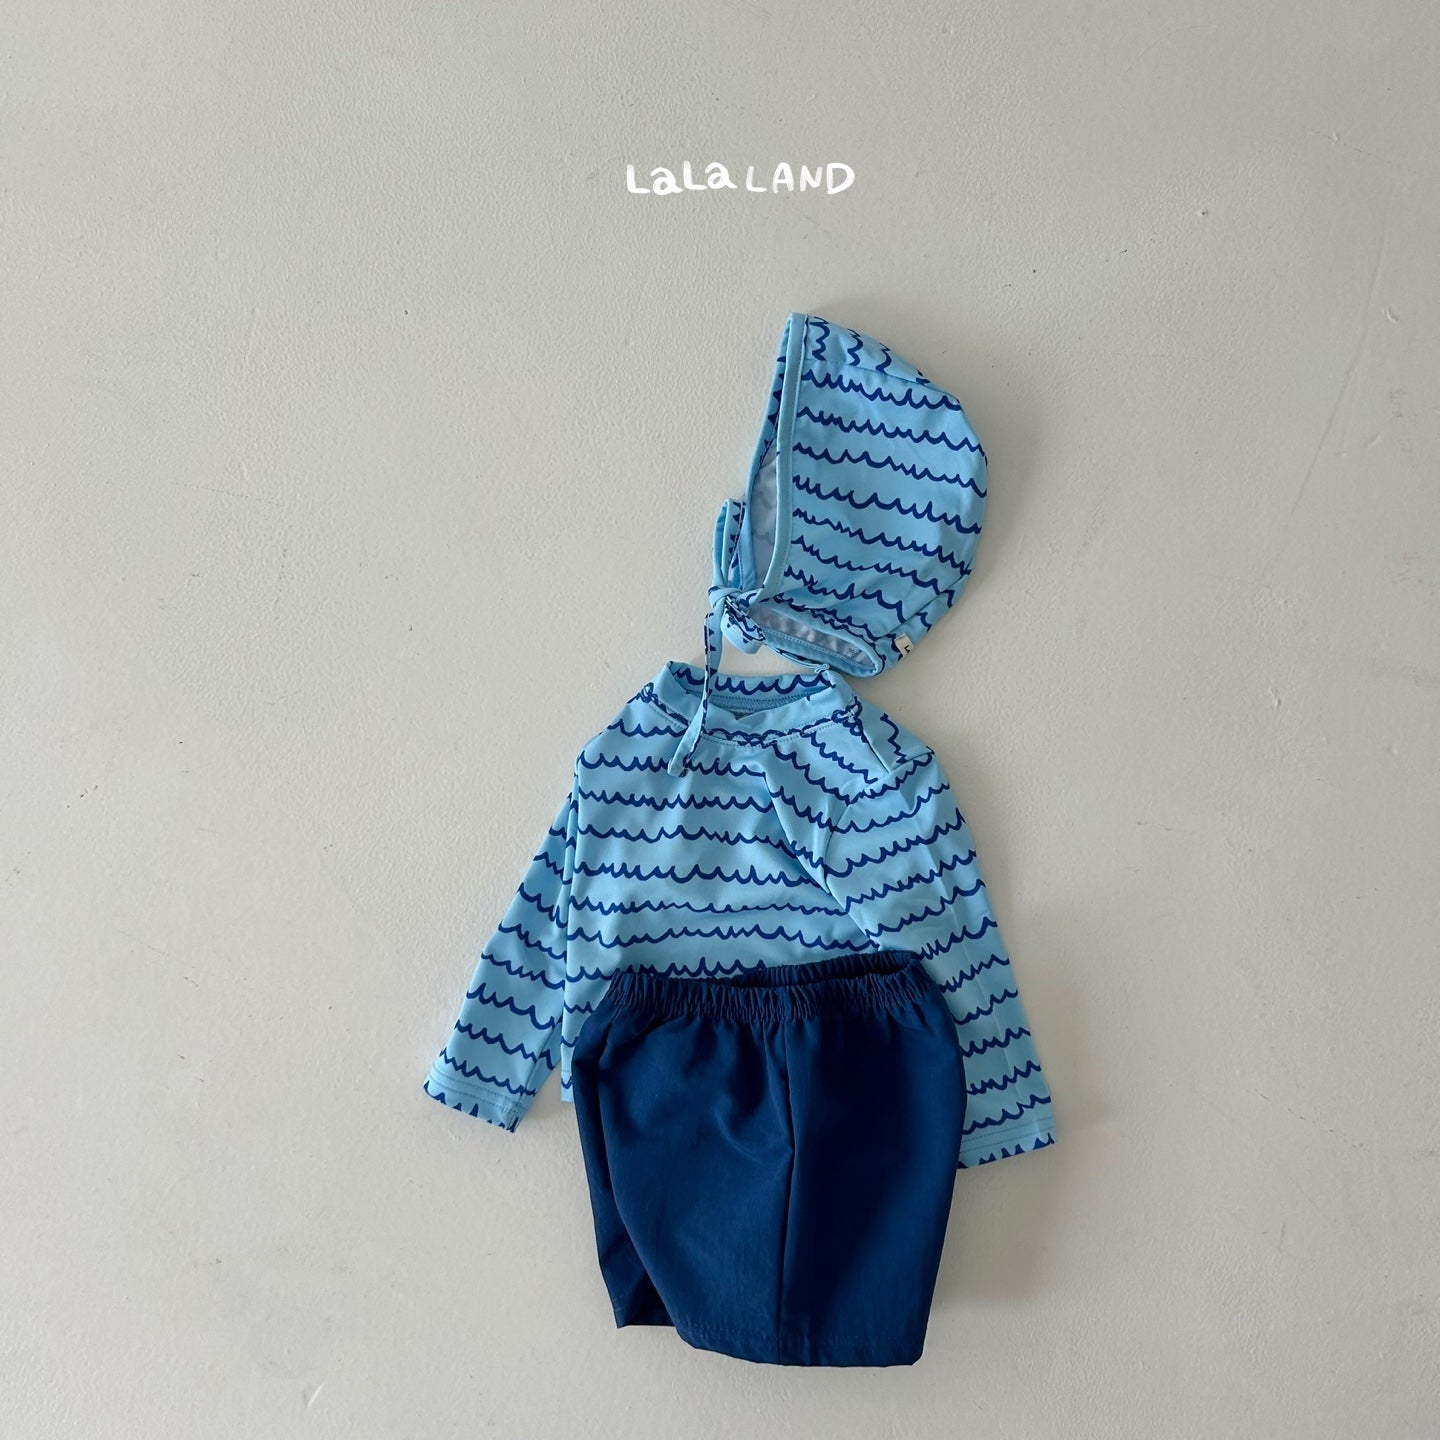 [Lala Land] The Low Rash Guard Baby Set